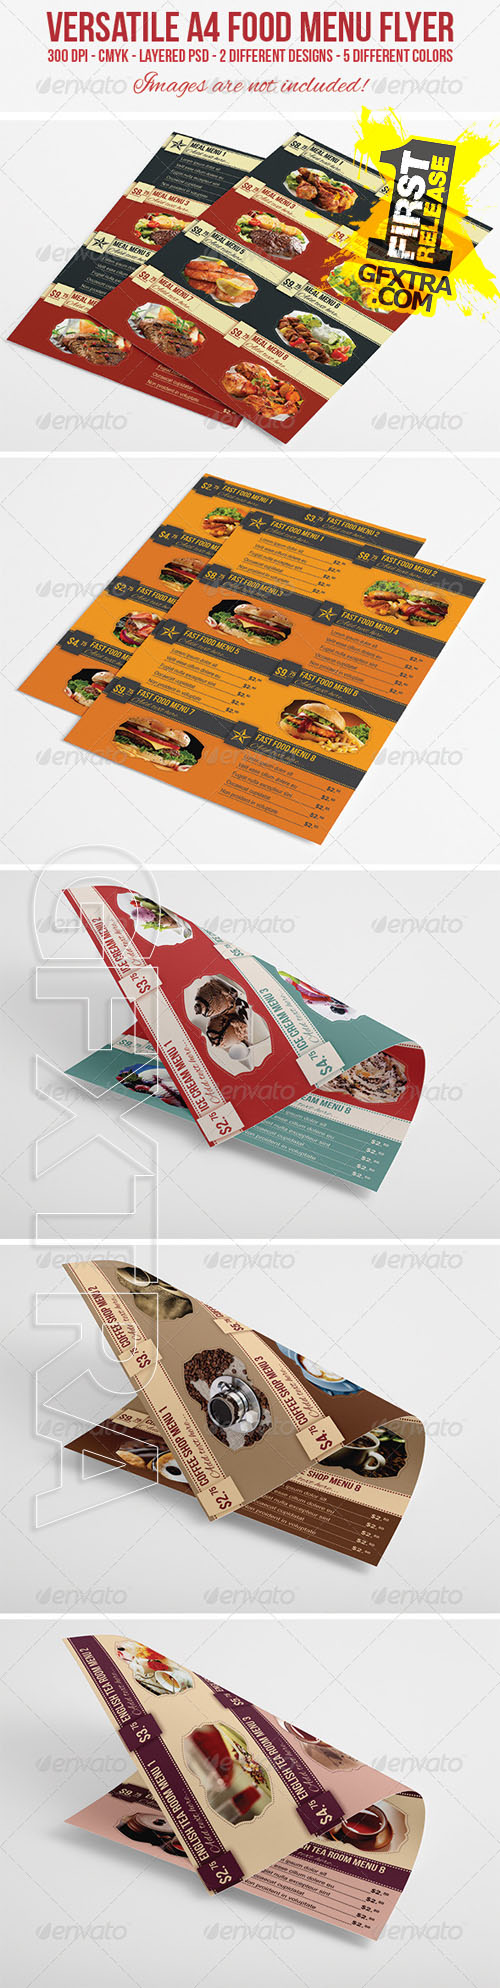 GraphicRiver - A4 Food Menu / Flyer 